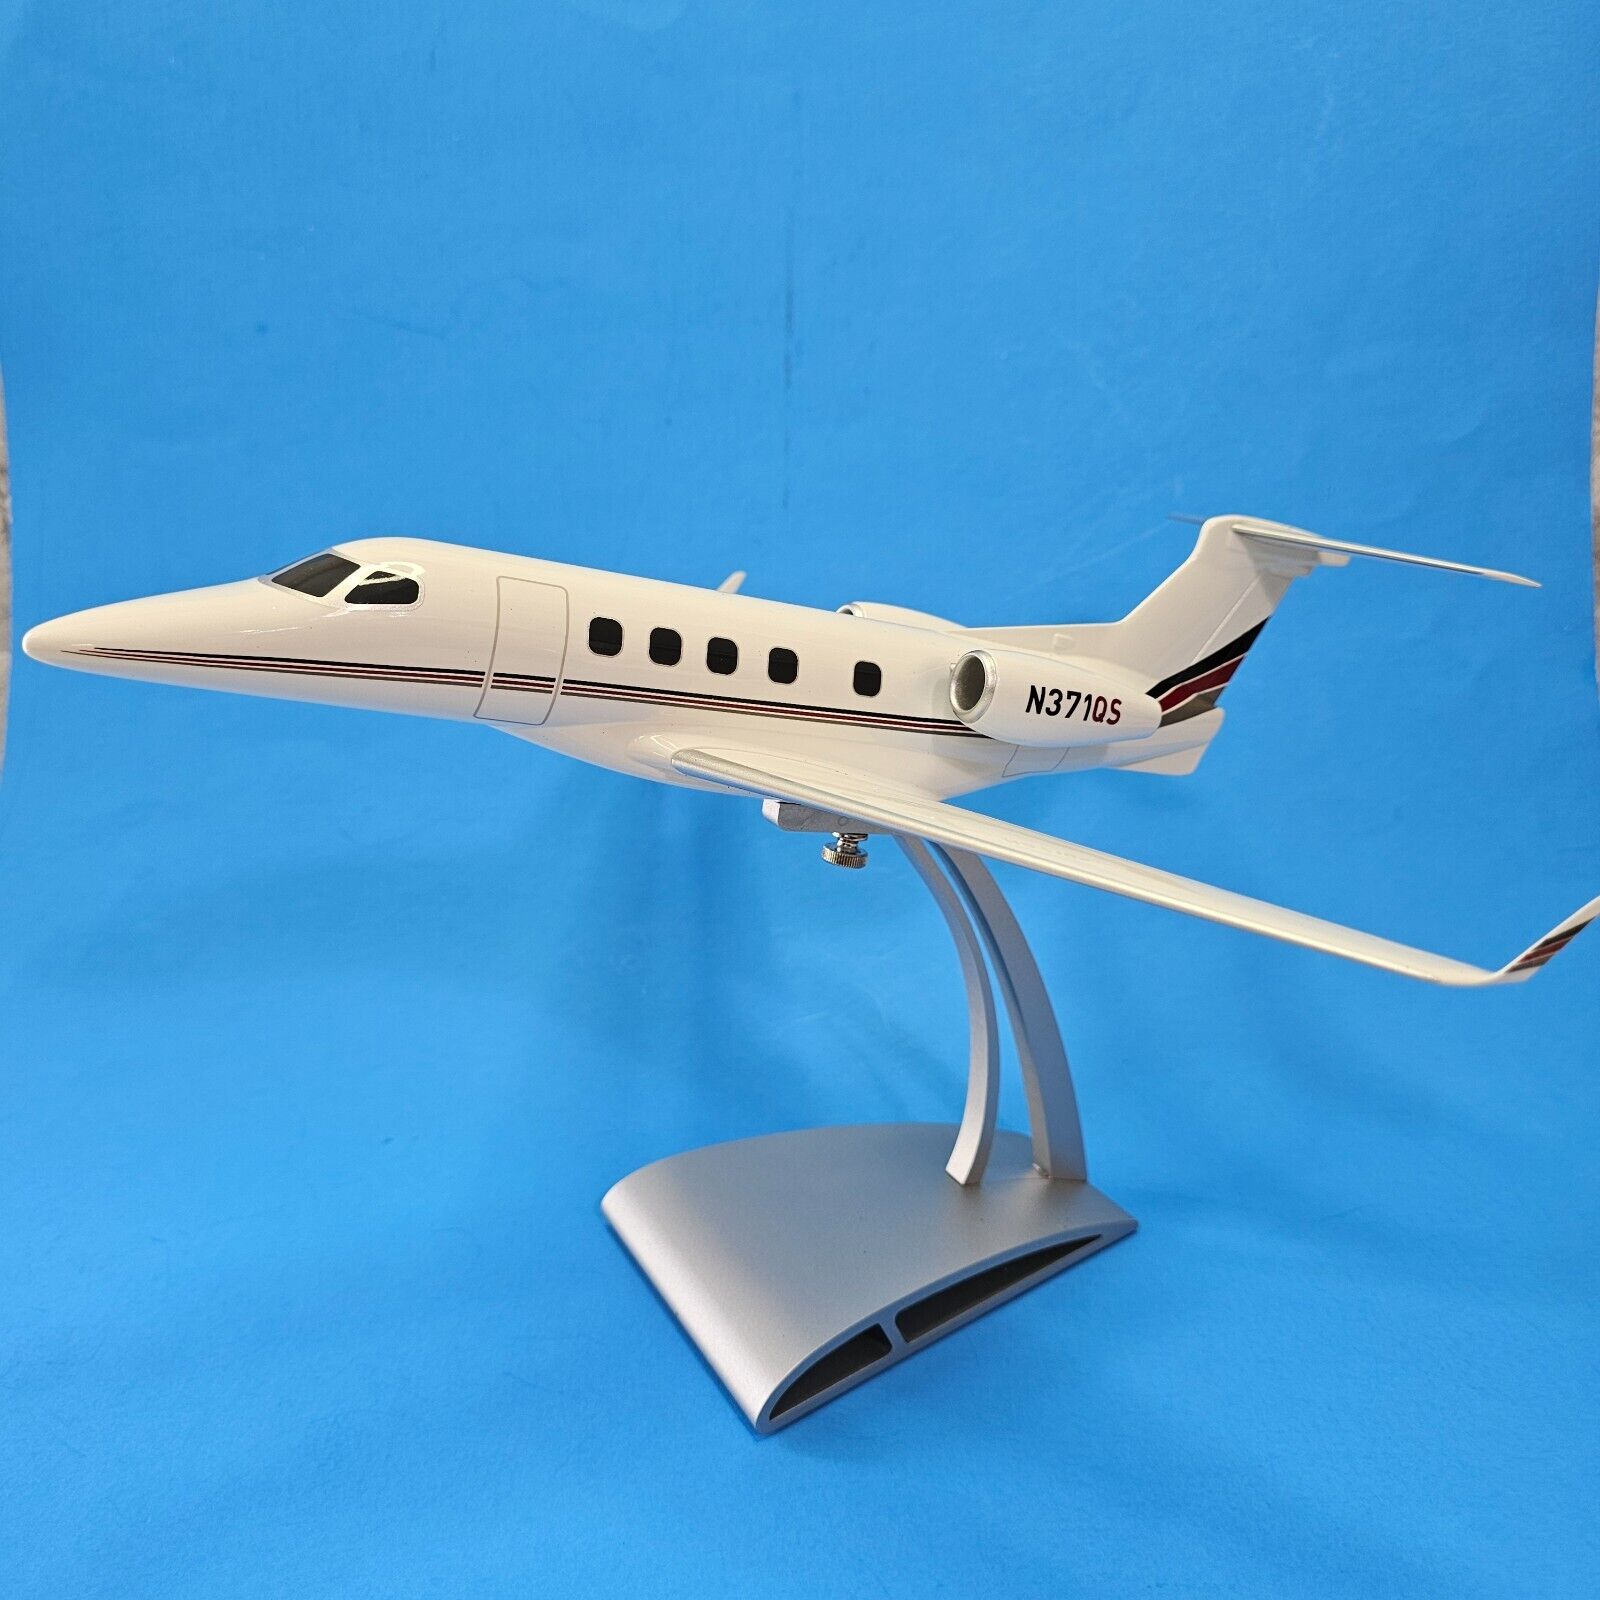 Pacmin NetJets Embraer Phenom 300 1:50 Executive Desk Model Airplane - N371QS